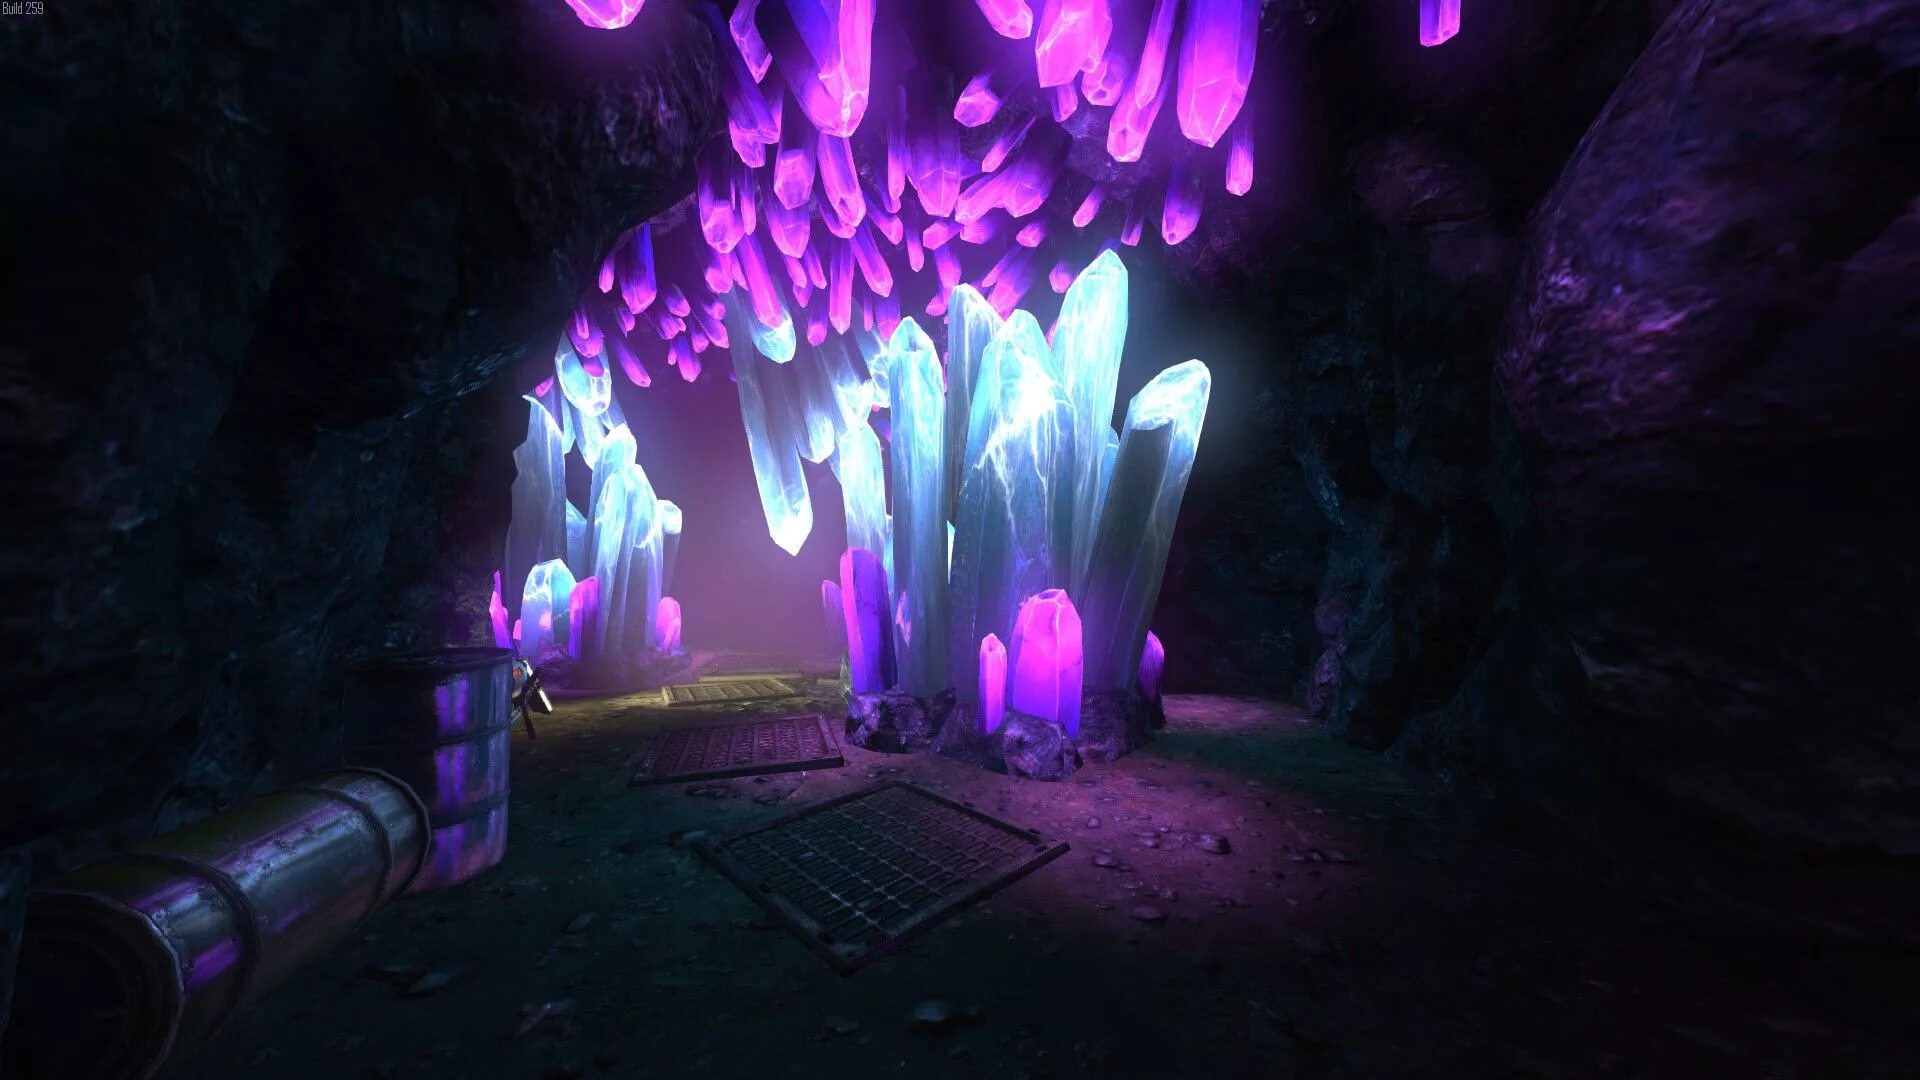 Пещеры Кристал-Кейв. Кристальная пещера wow арт. Пещера Кинзи. Пещера Кристальная Хакасия. Crystal cave